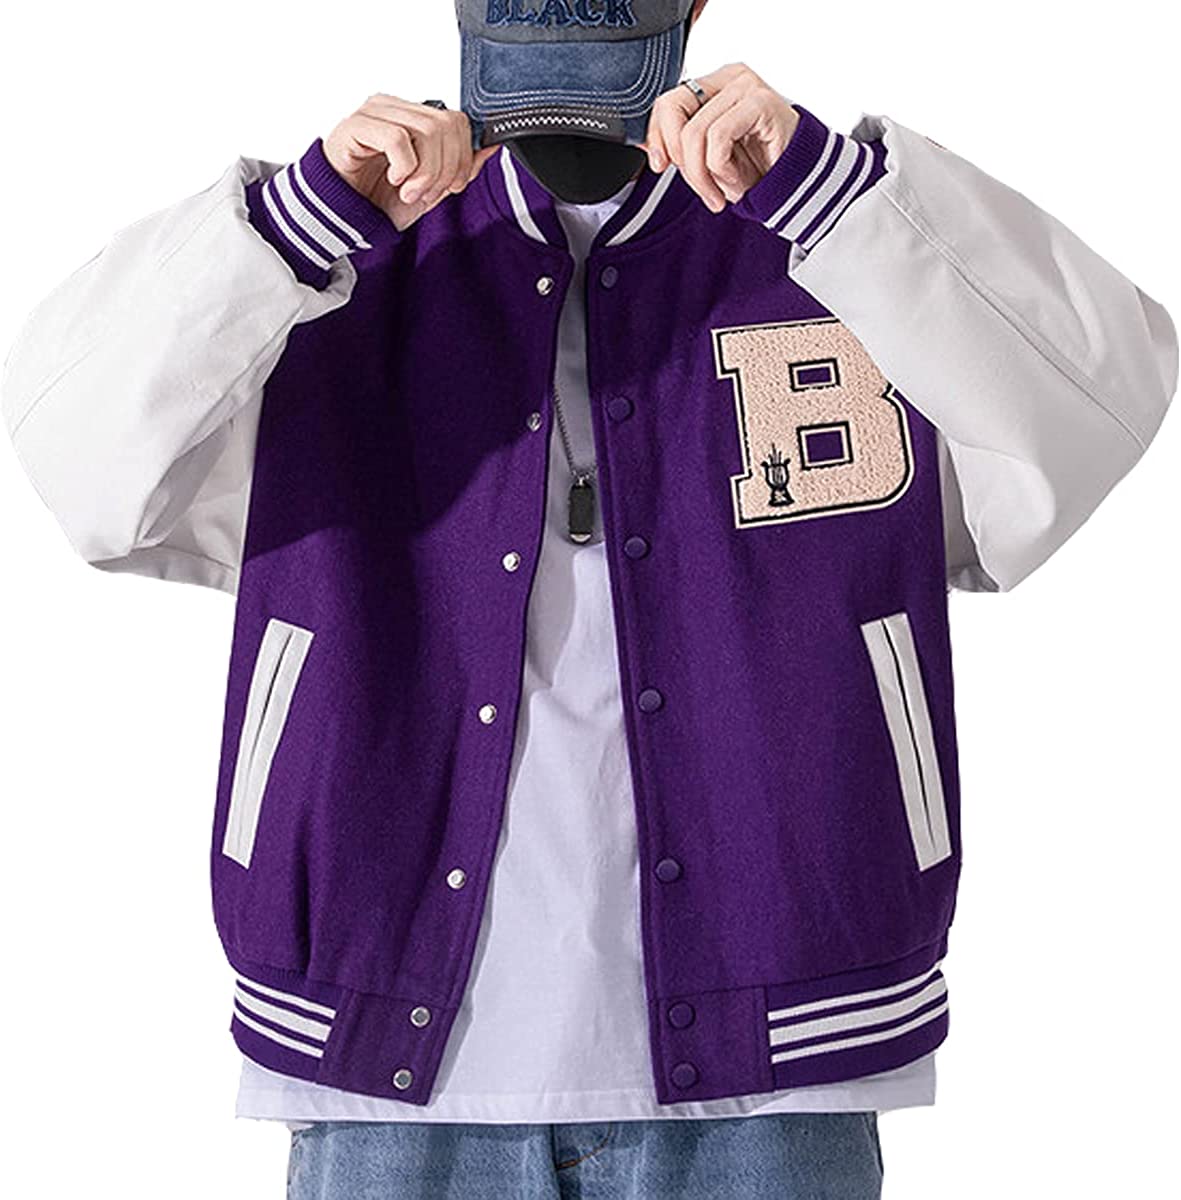 U World Men's Basic Cotton Baseball Varsity Jacket Purple (S) at   Men's Clothing store